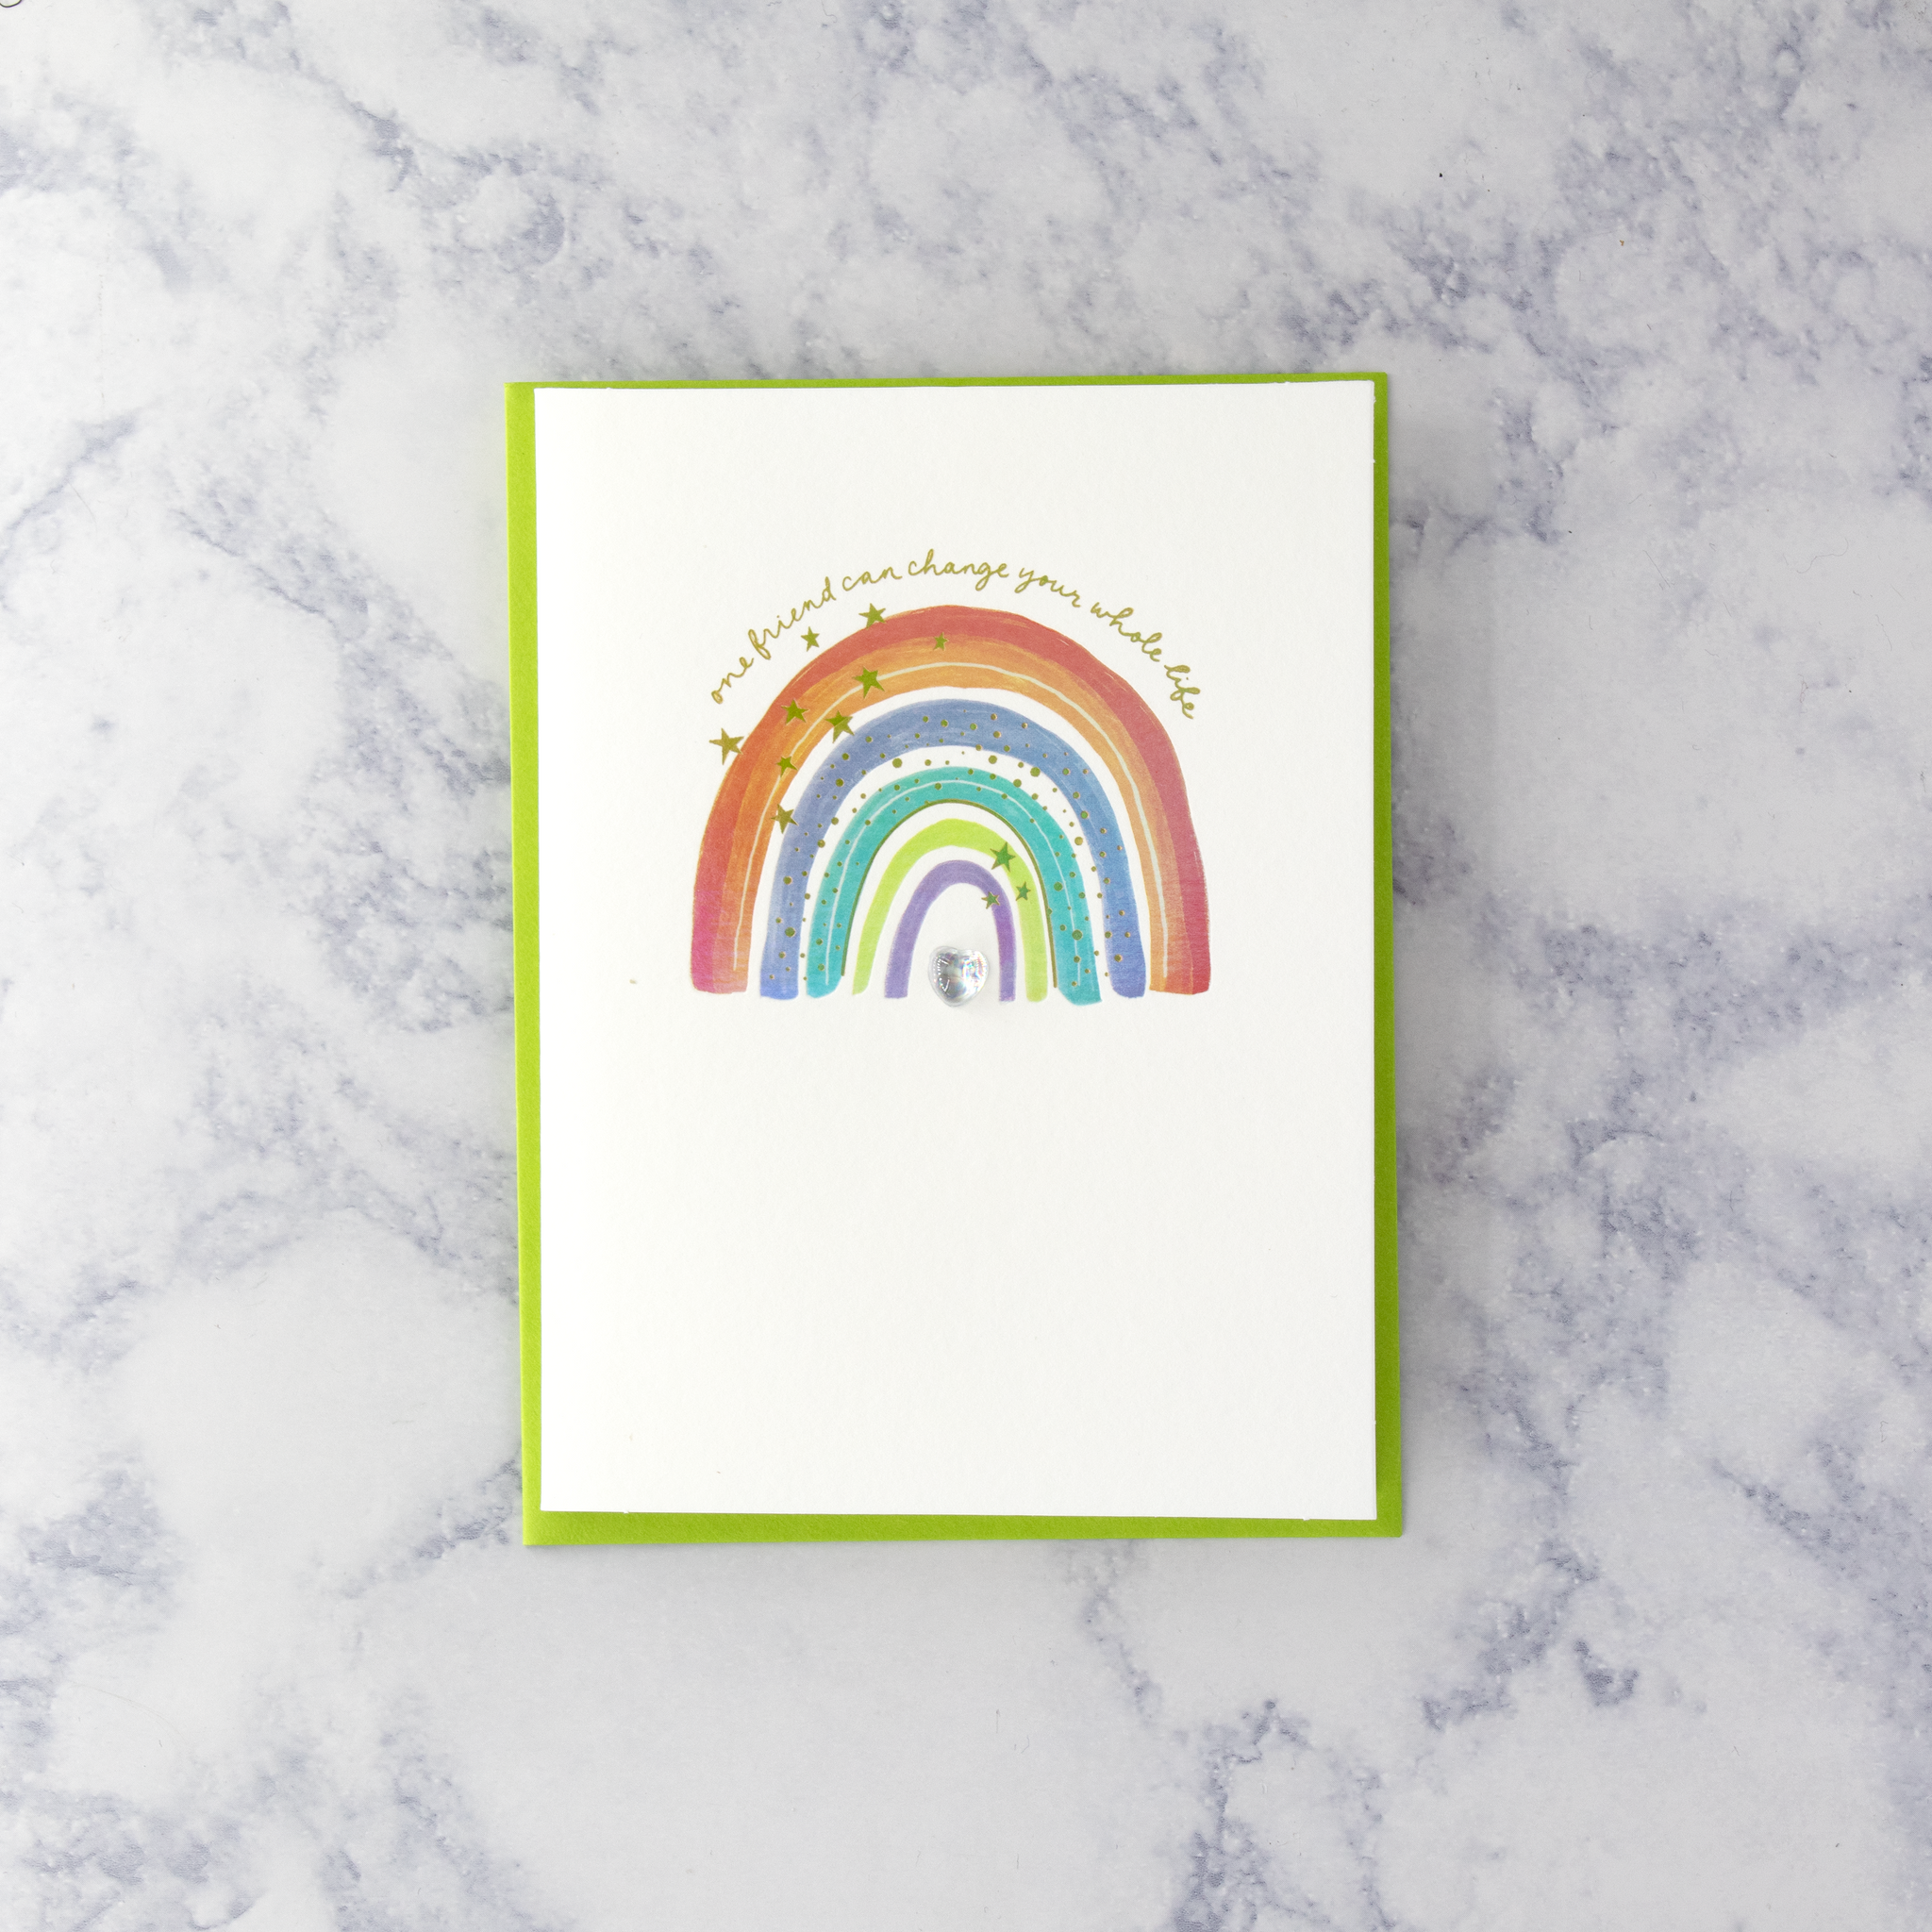 Rainbow "One Friend" LGBTQIA+ Friendship Card